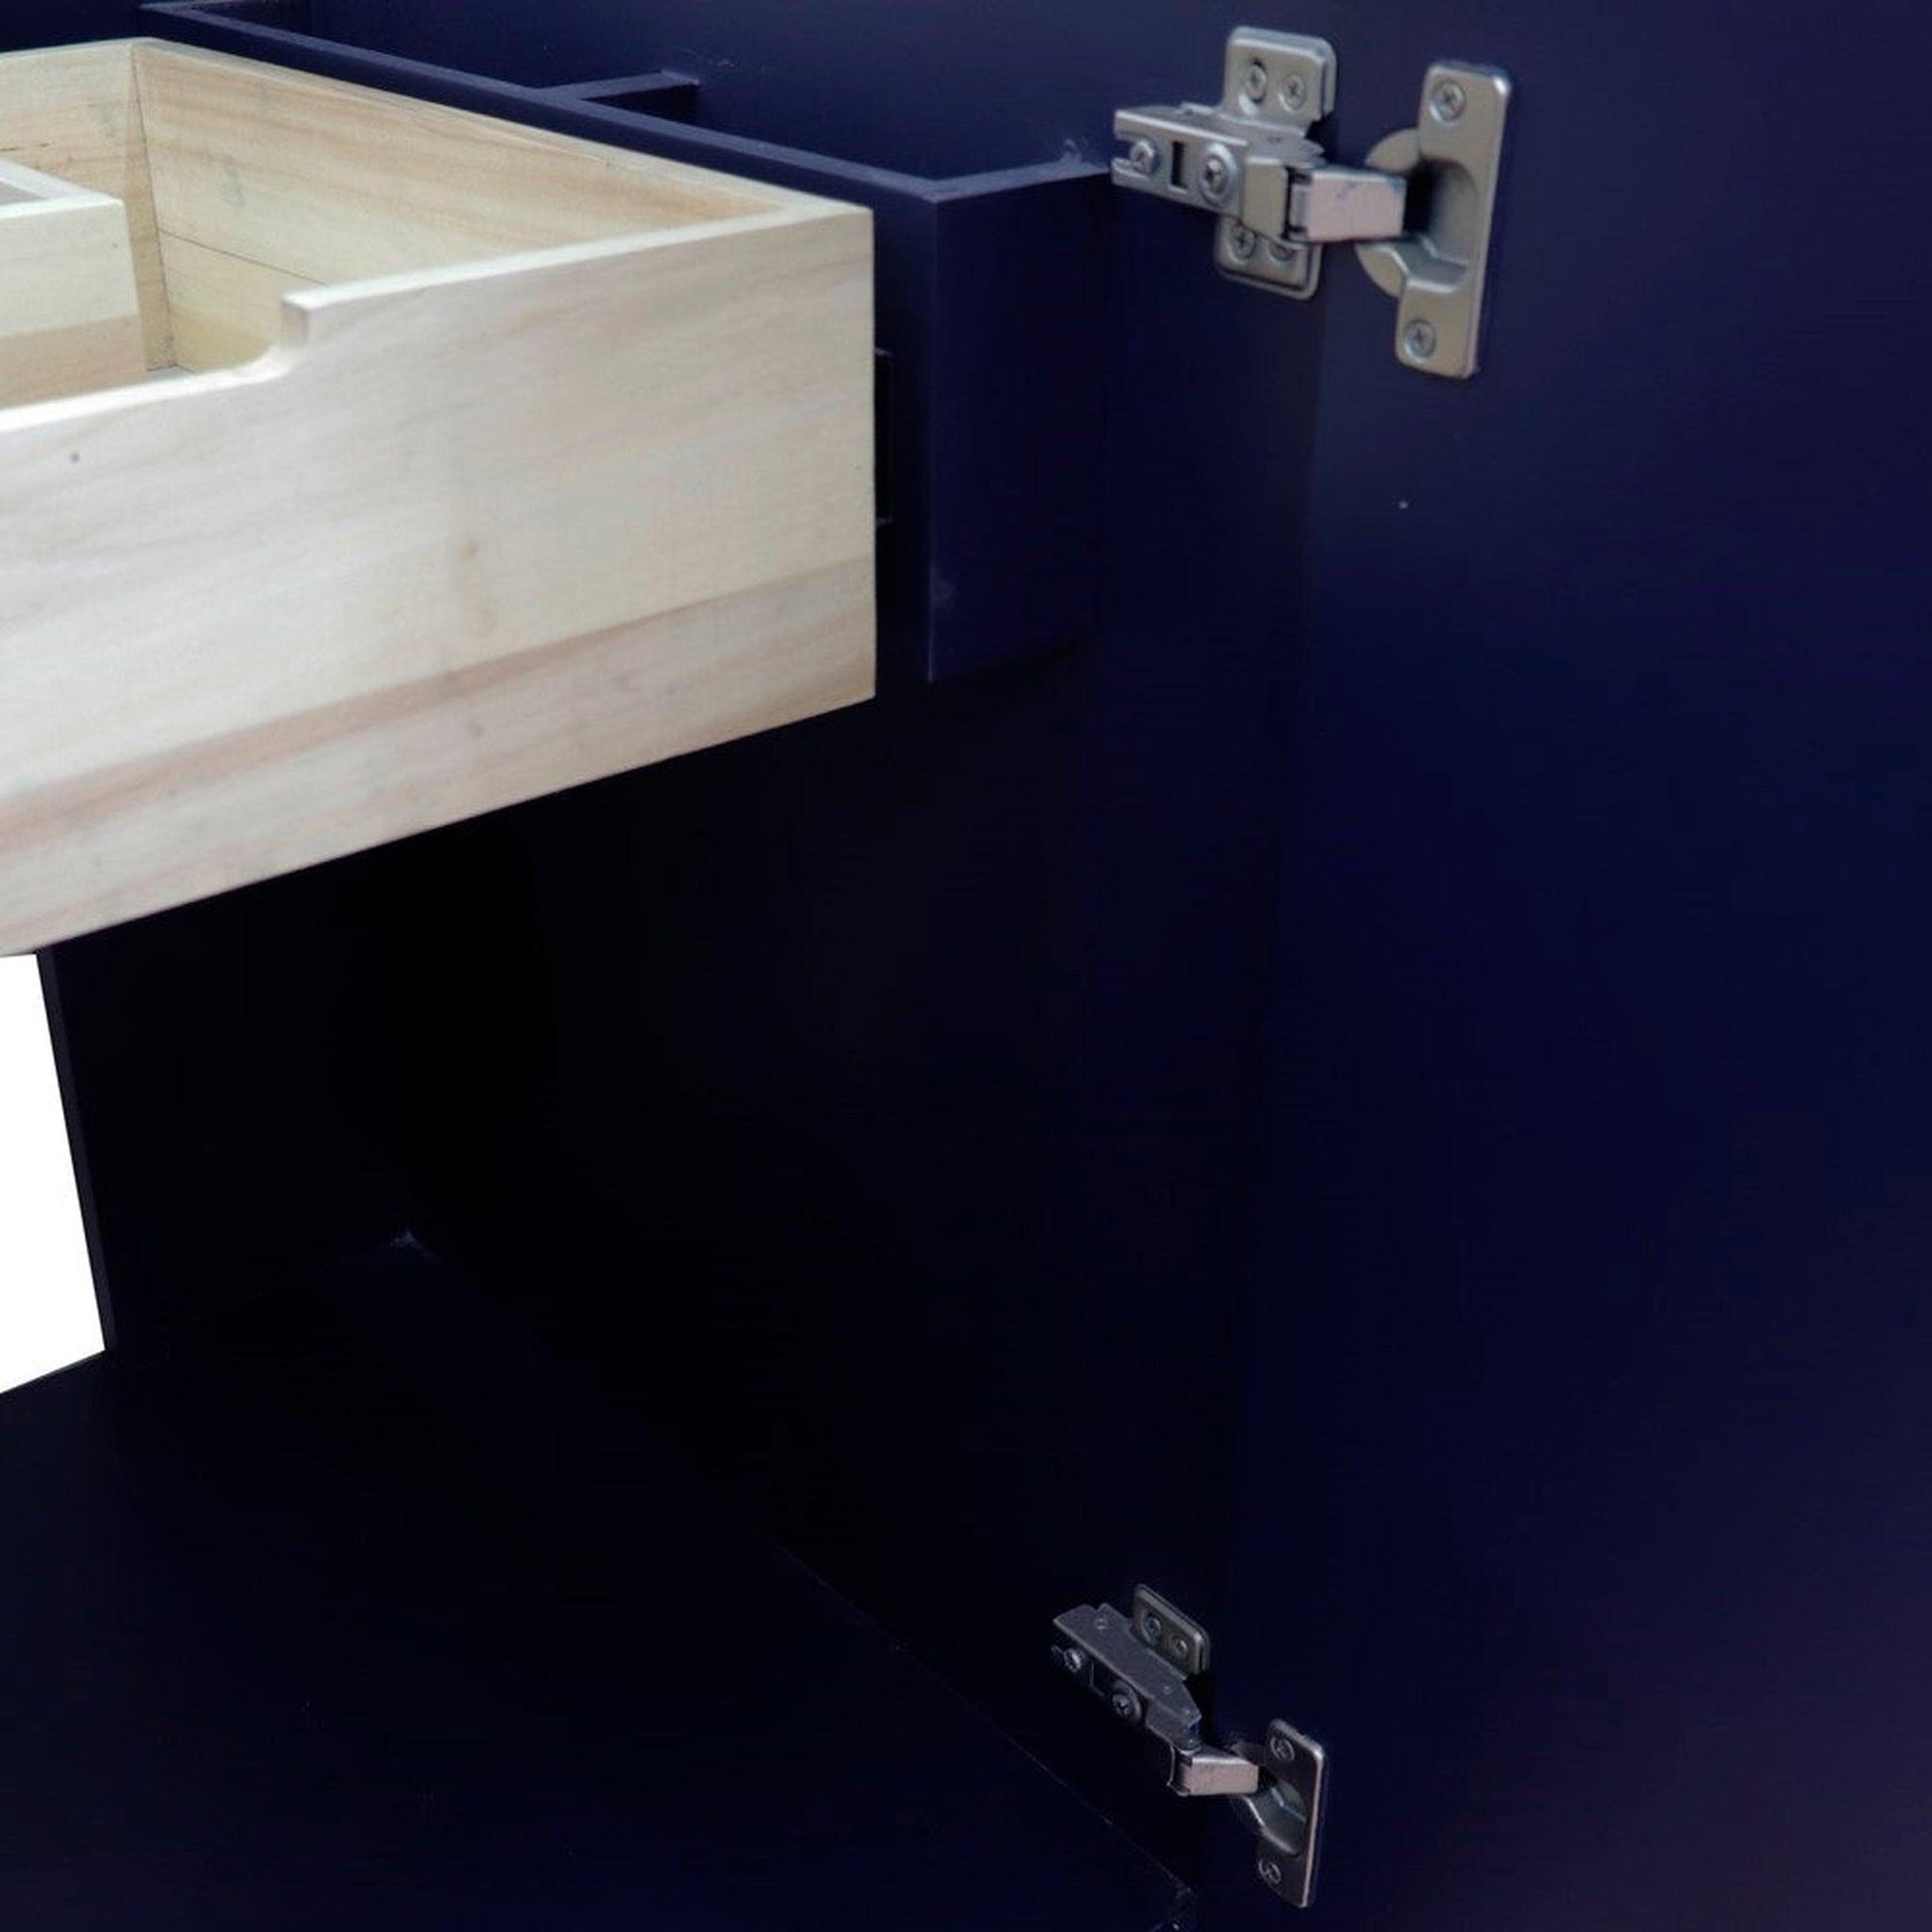 Bellaterra Home Forli 31" 2-Door 1-Drawer Blue Freestanding Vanity Set With Ceramic Vessel Sink And Gray Granite Top